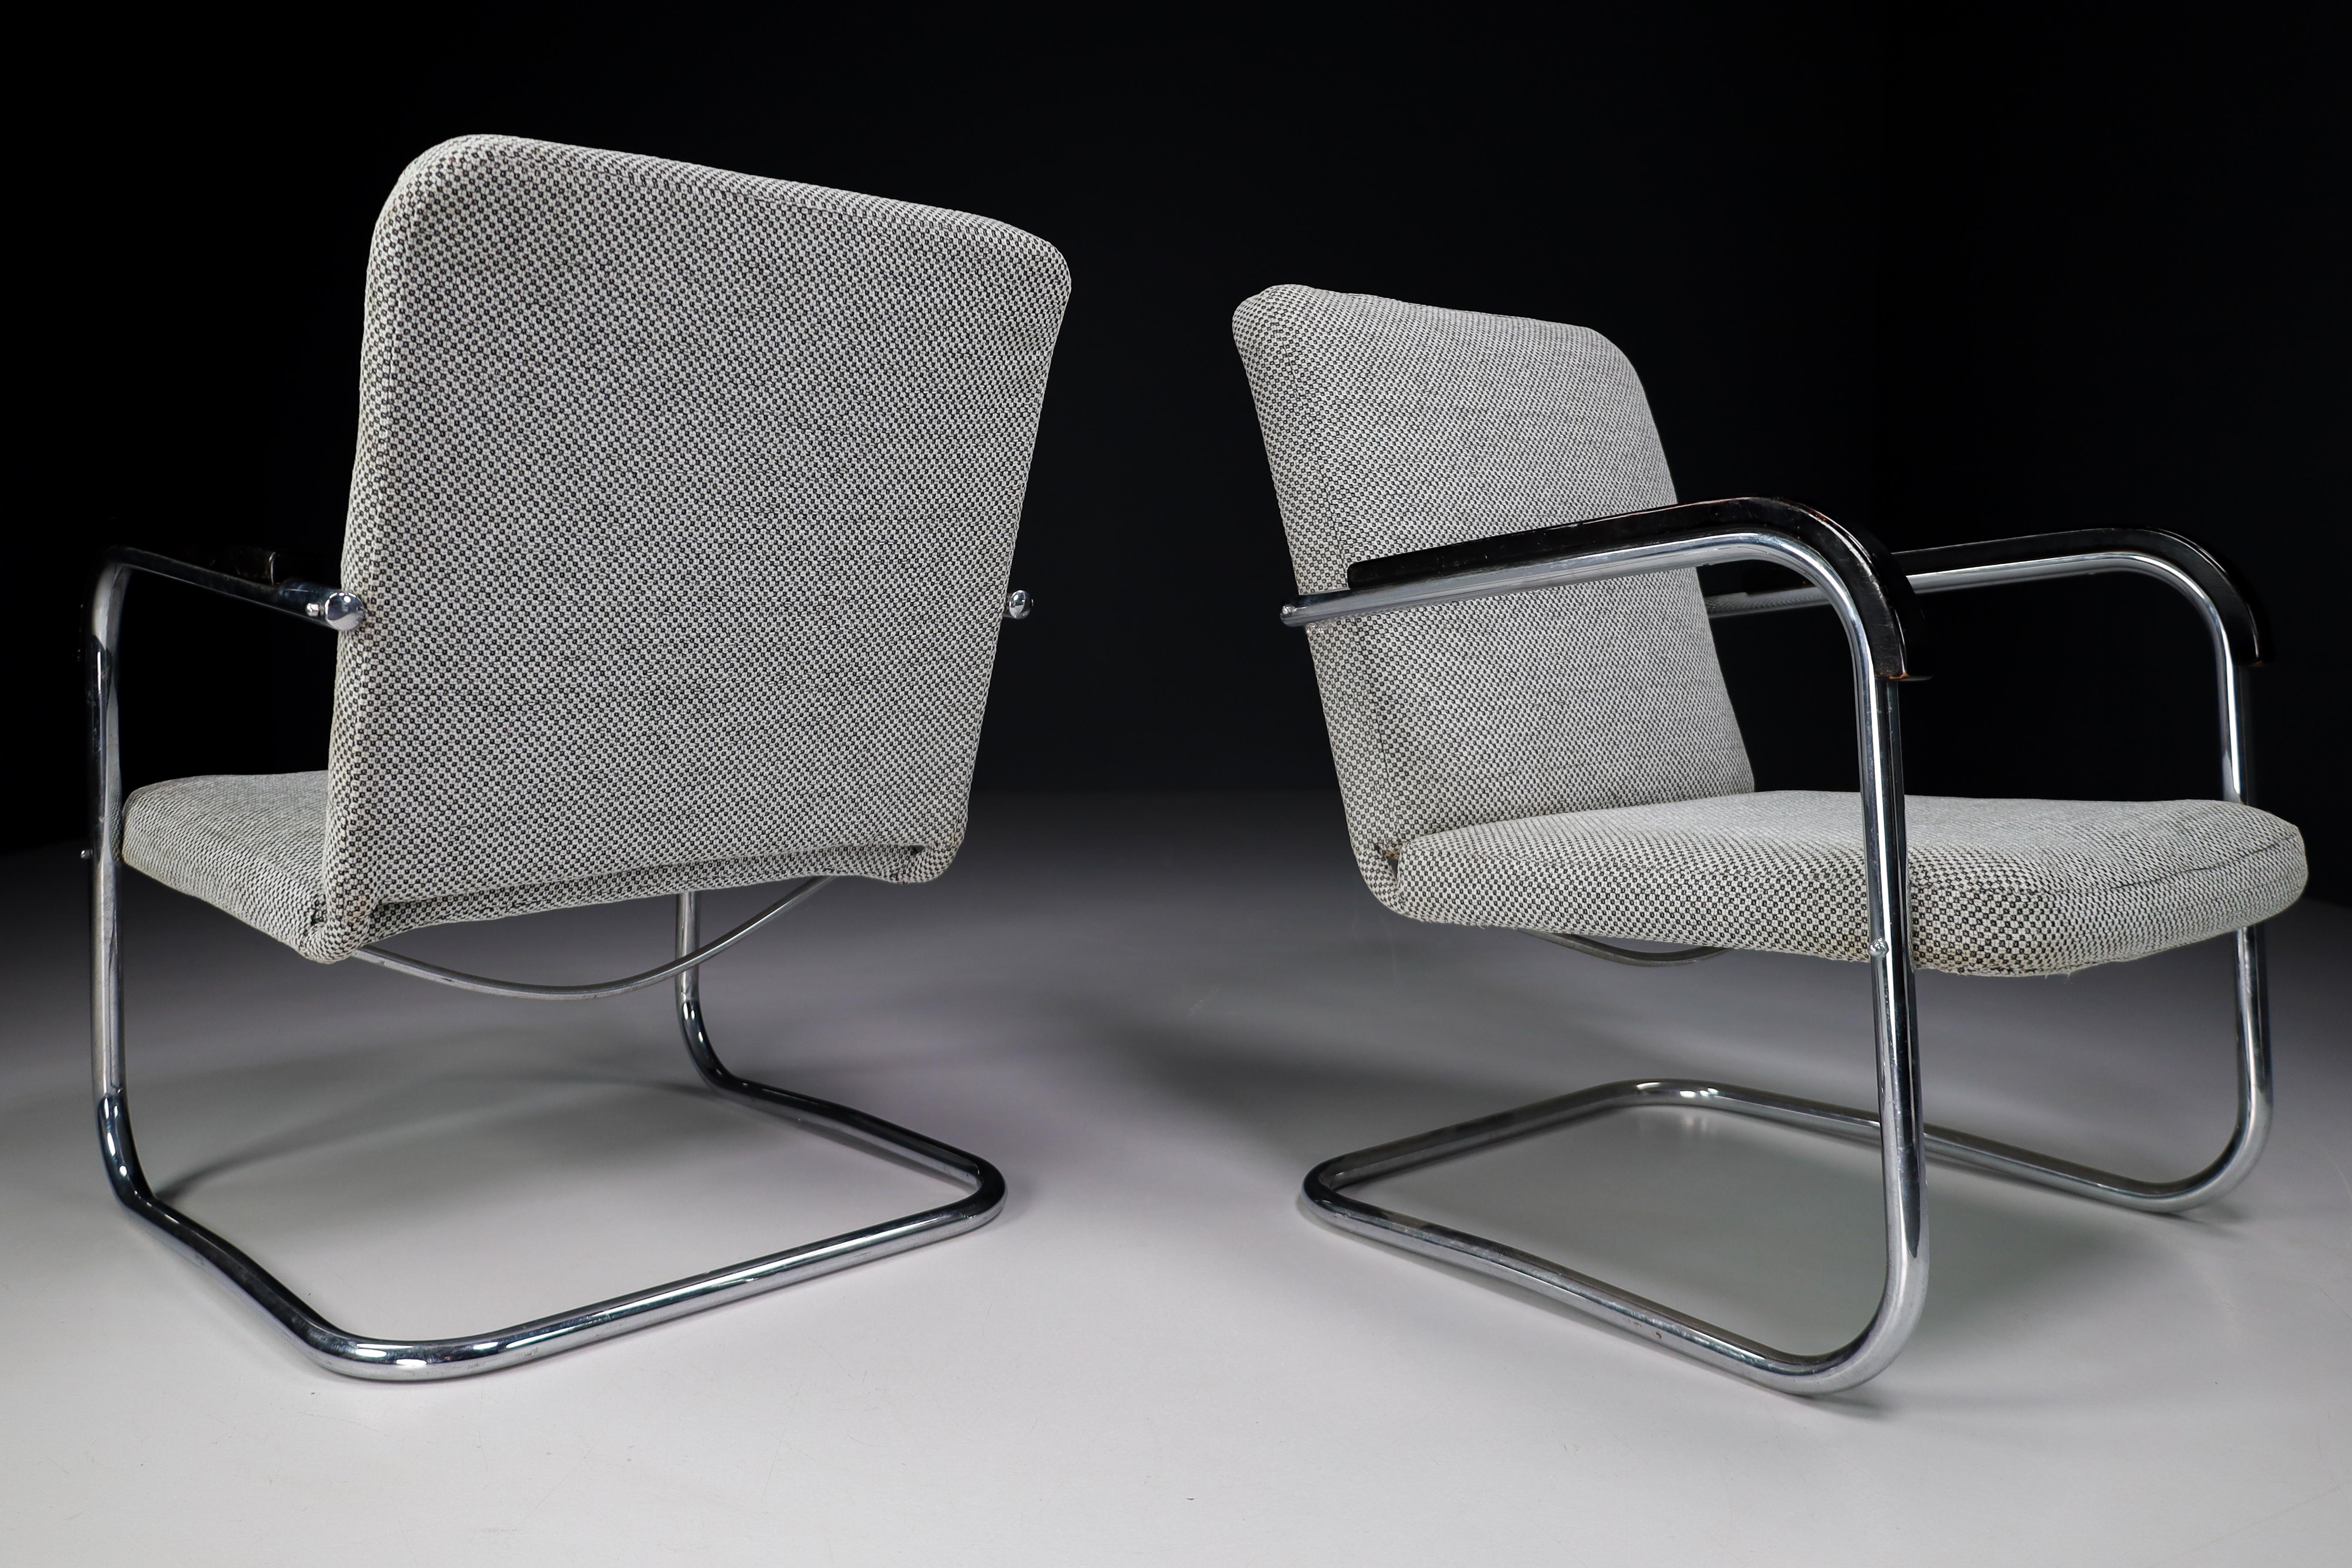 20th Century Pair of Chrome Steel Armchairs by Thonet circa 1930s Midcentury Bauhaus Period